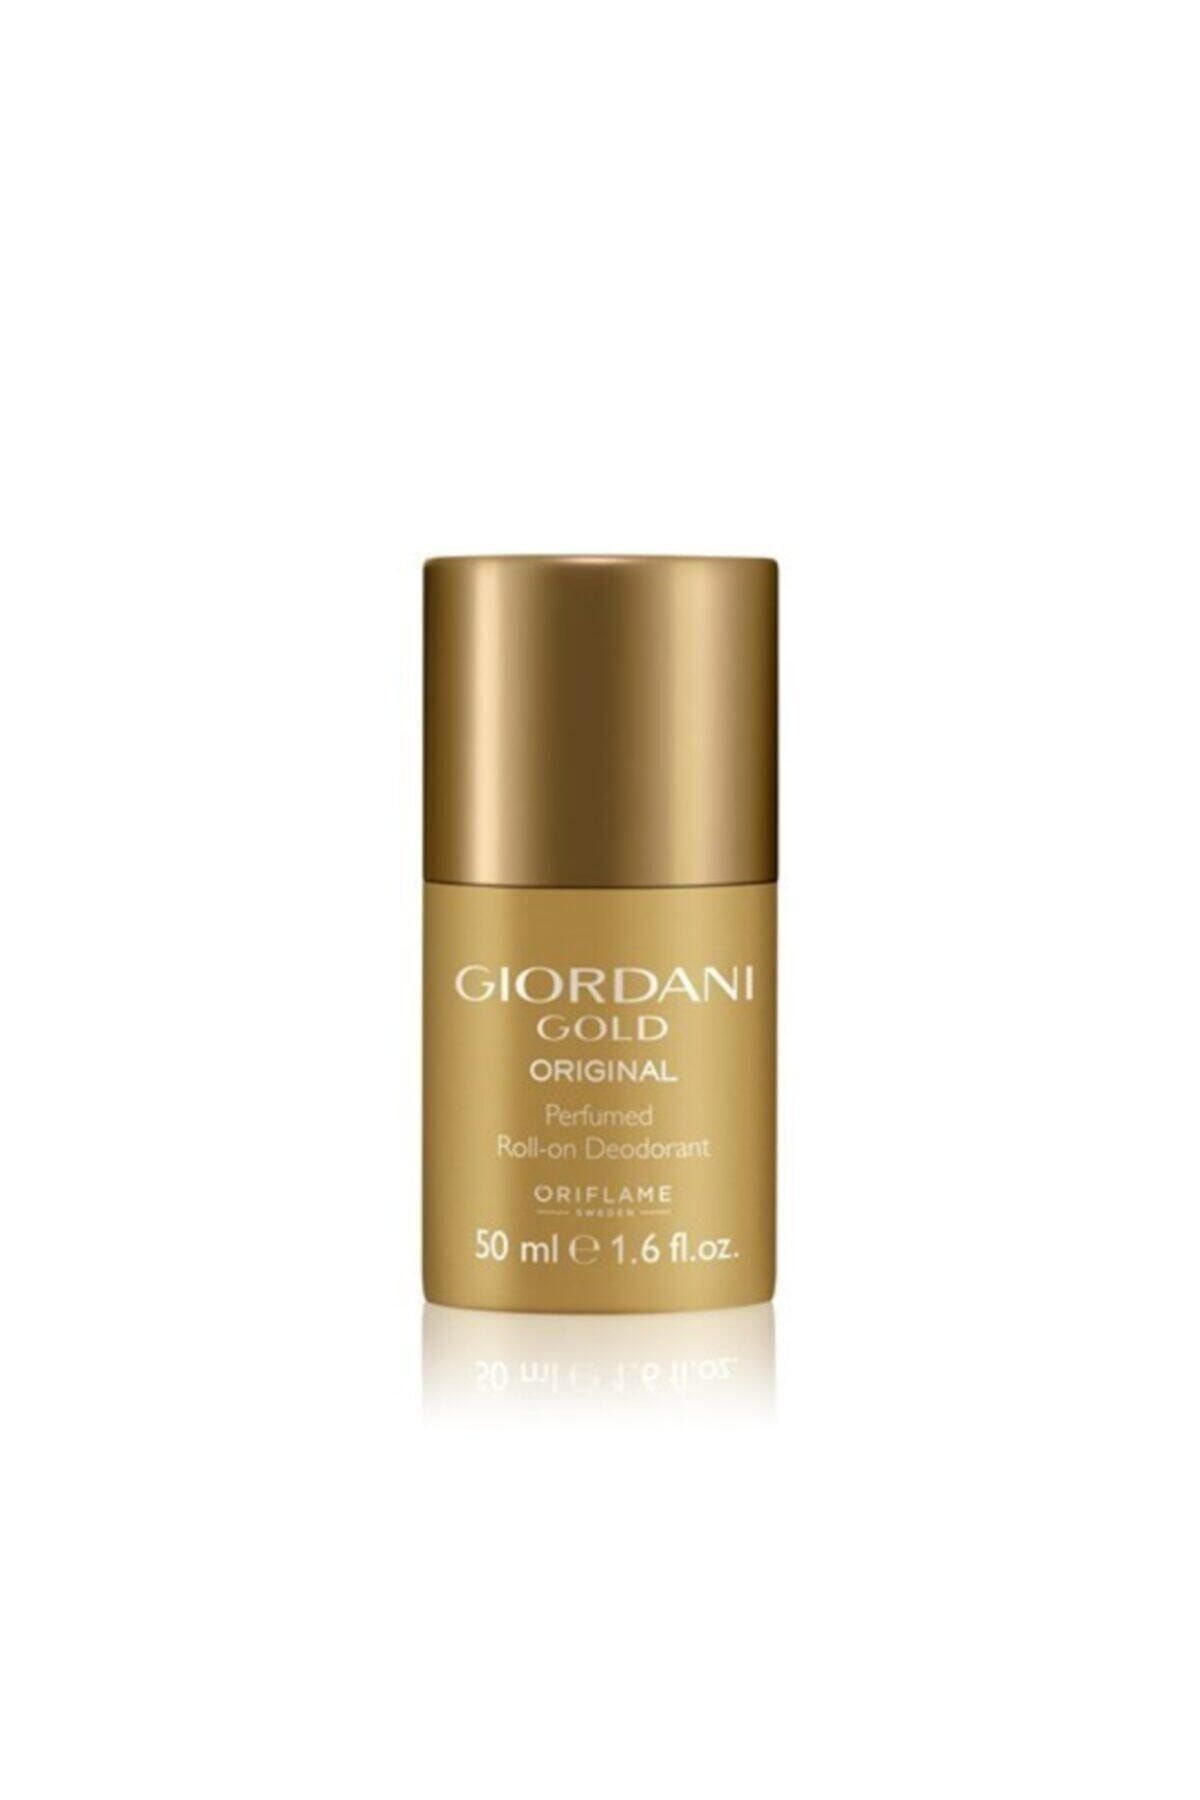 Oriflame Giordani Gold Original Parfümlü Kadın Roll-on Deodorant 50ml